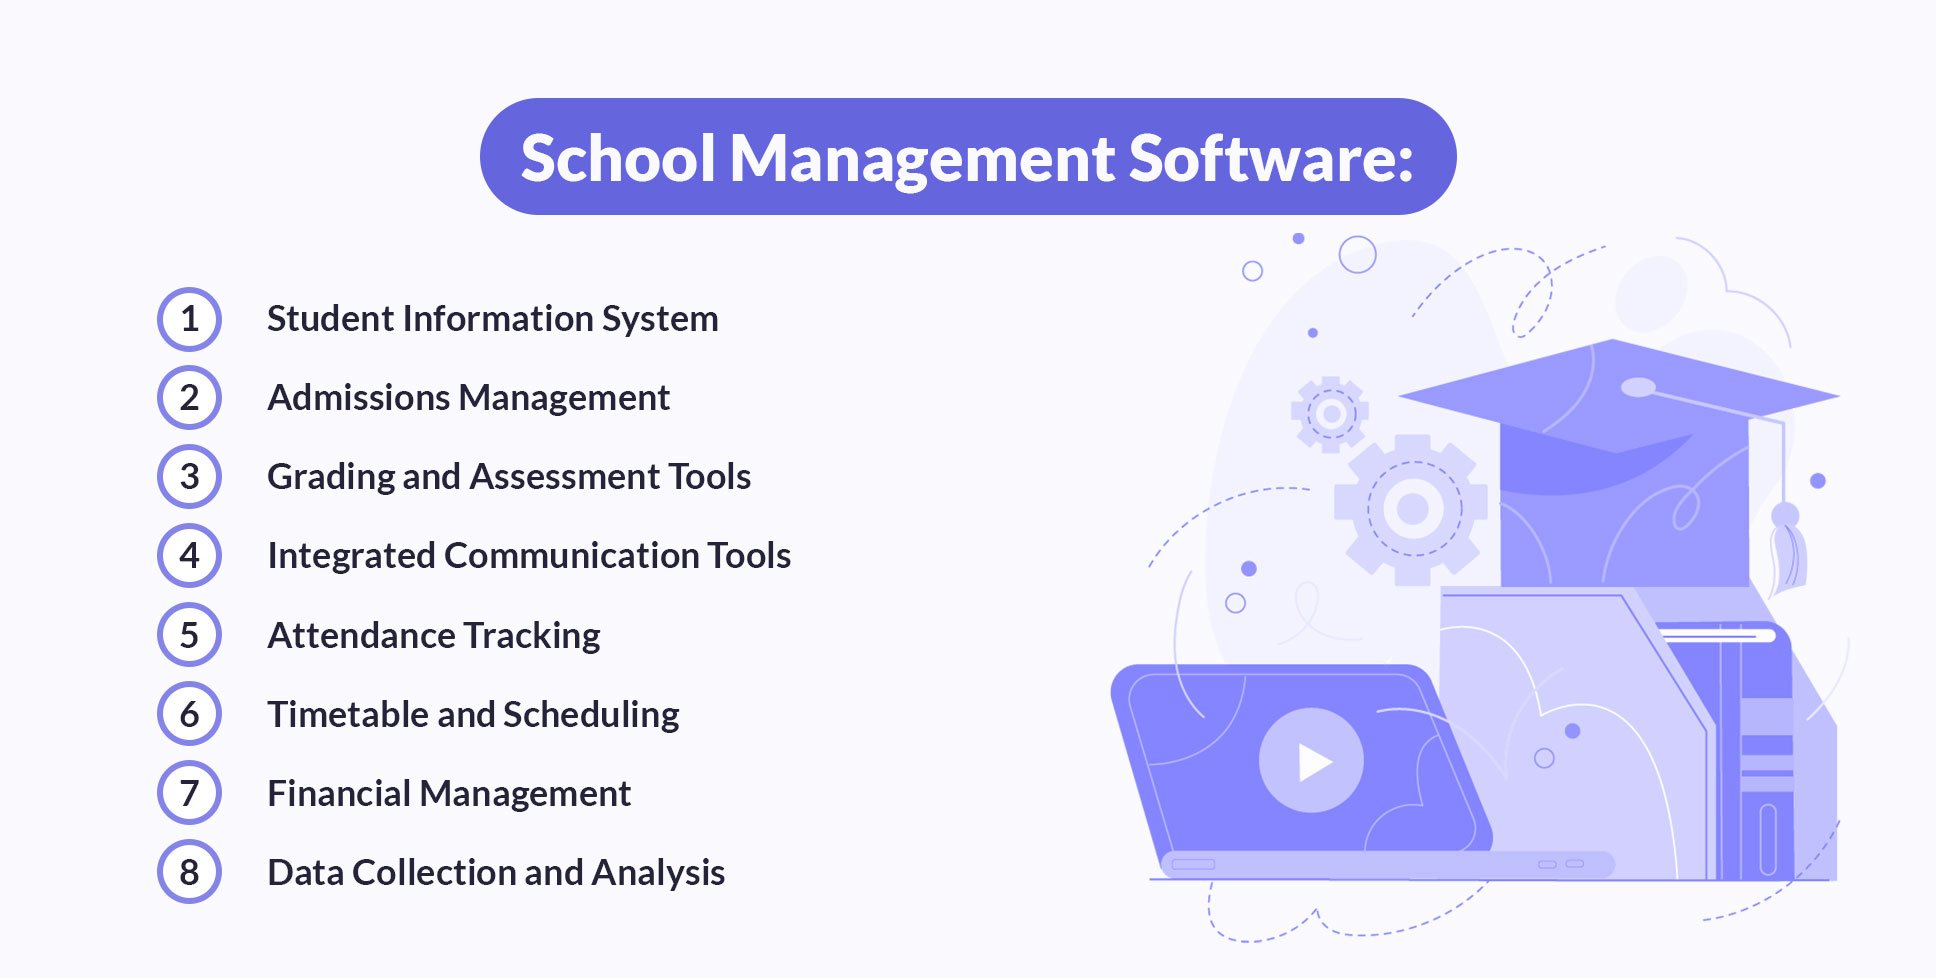 Key school management software features